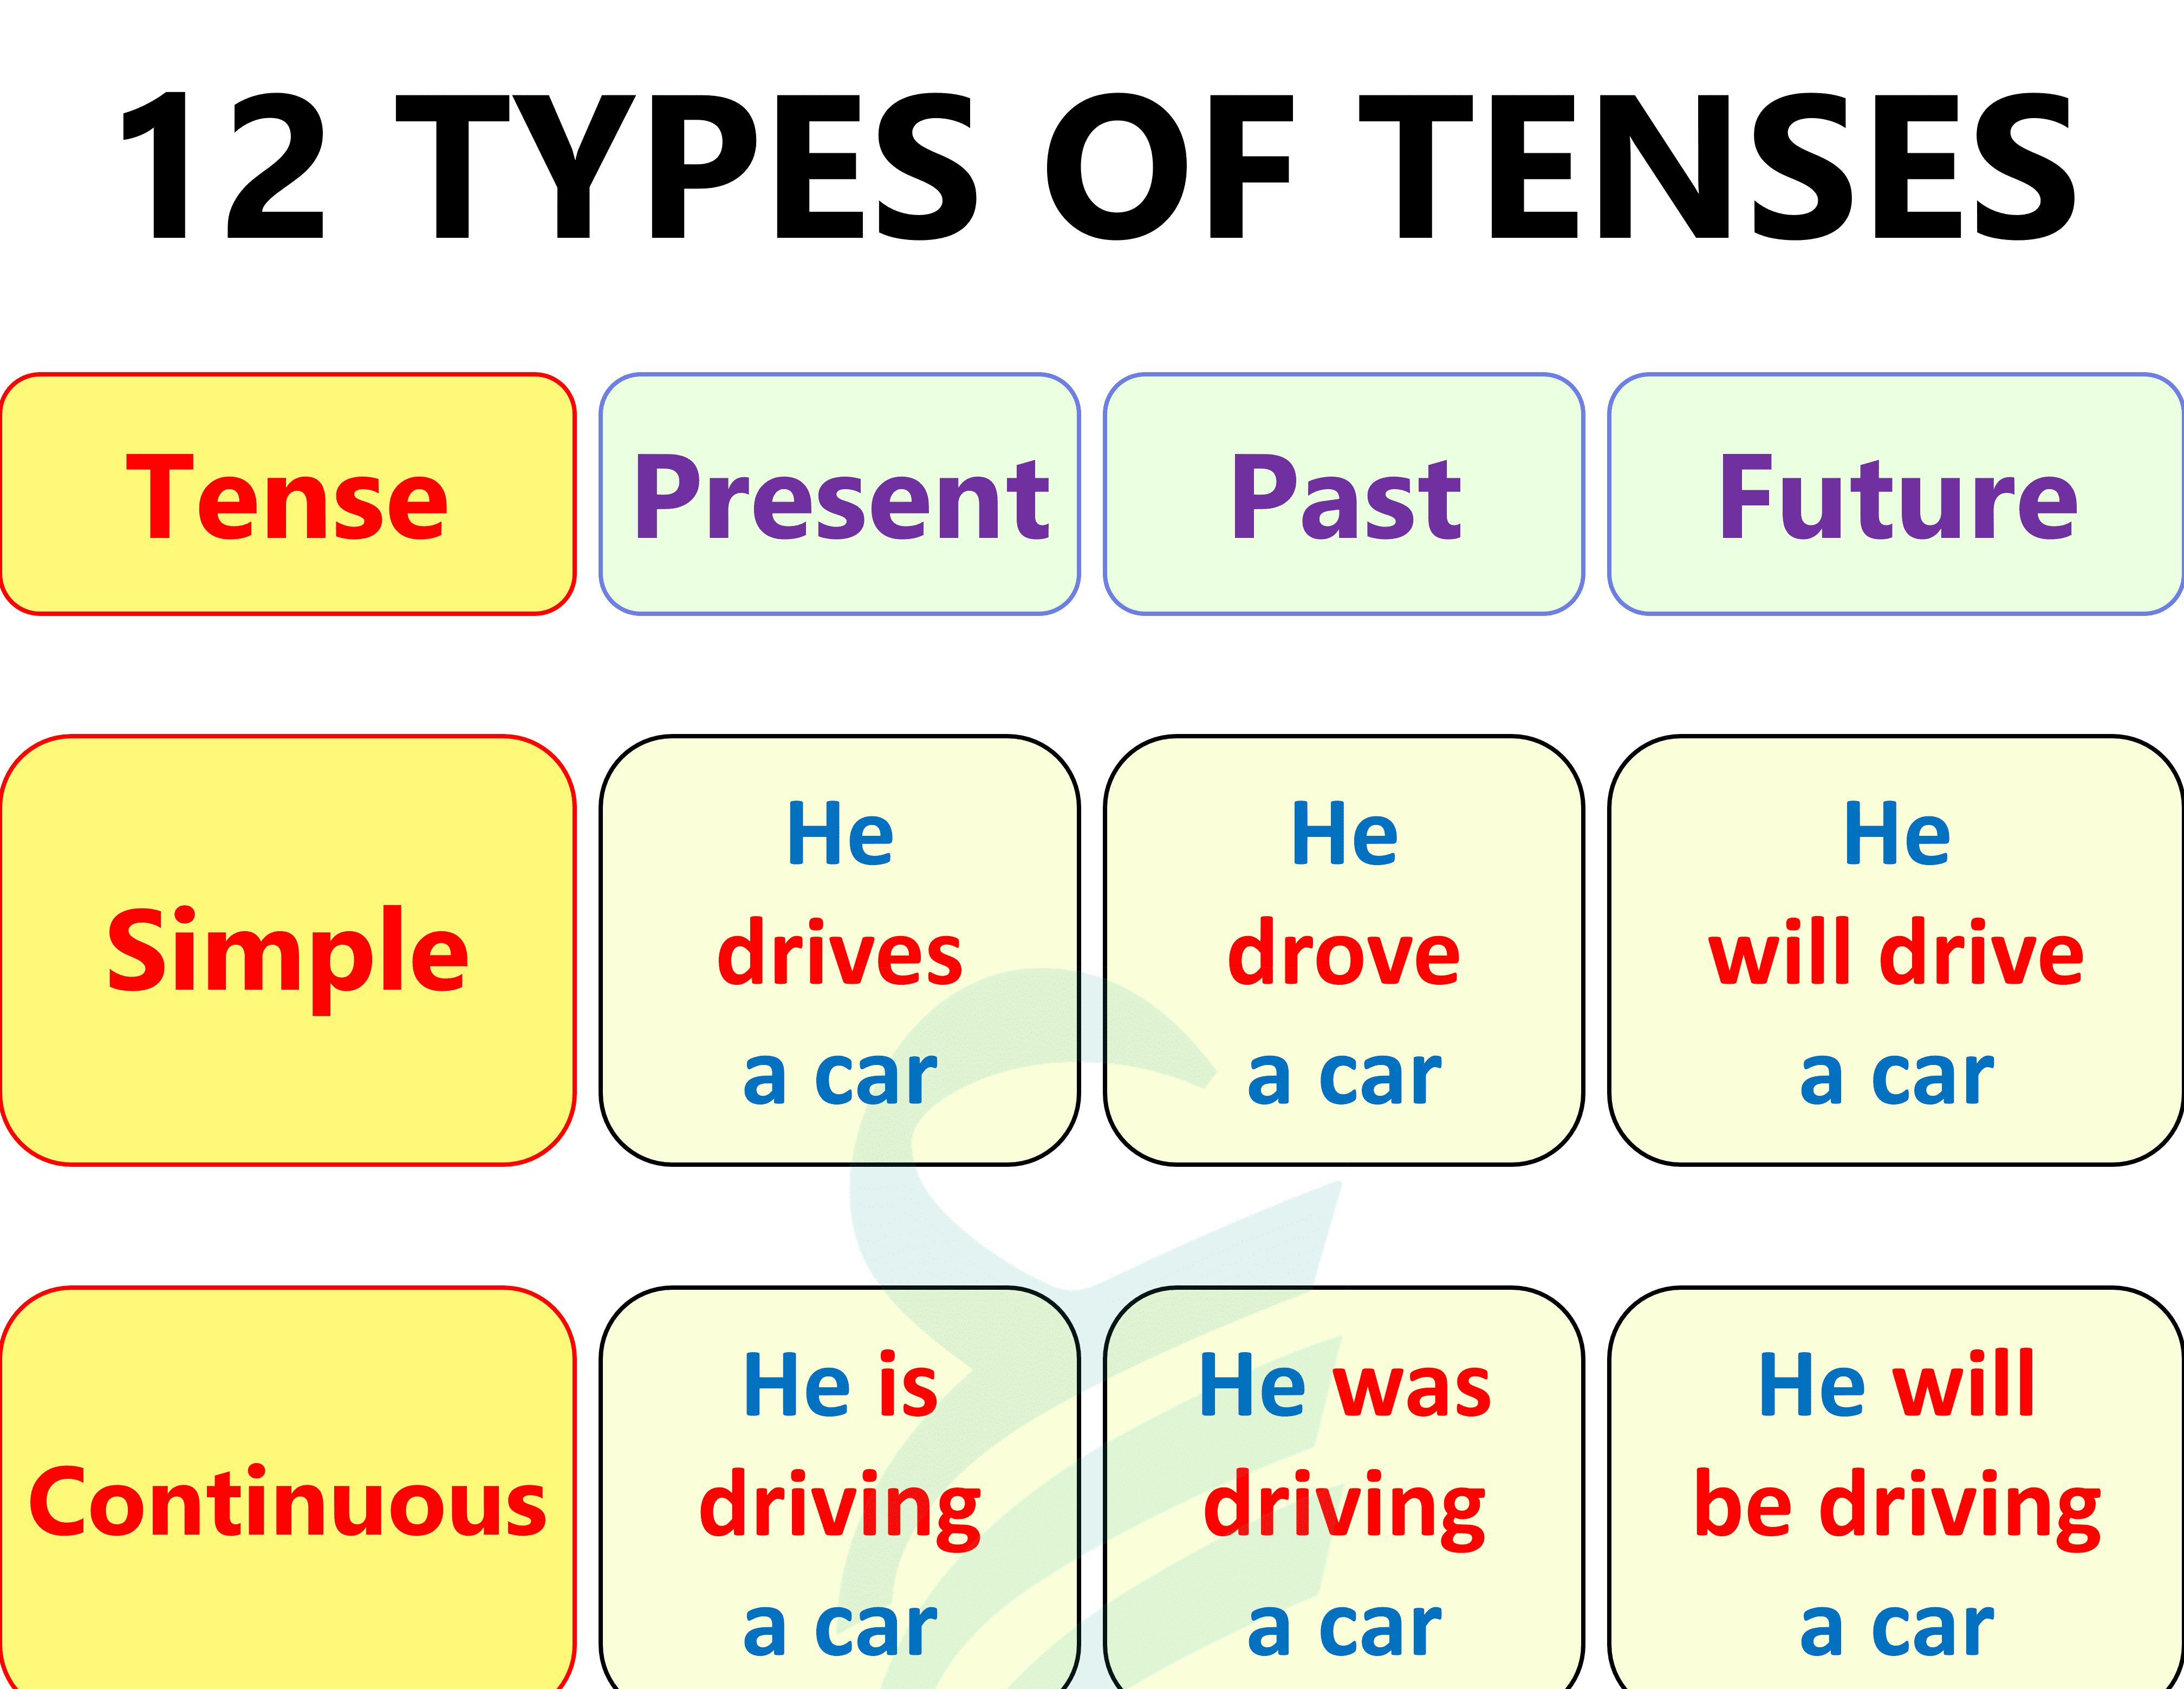 english tenses presentation